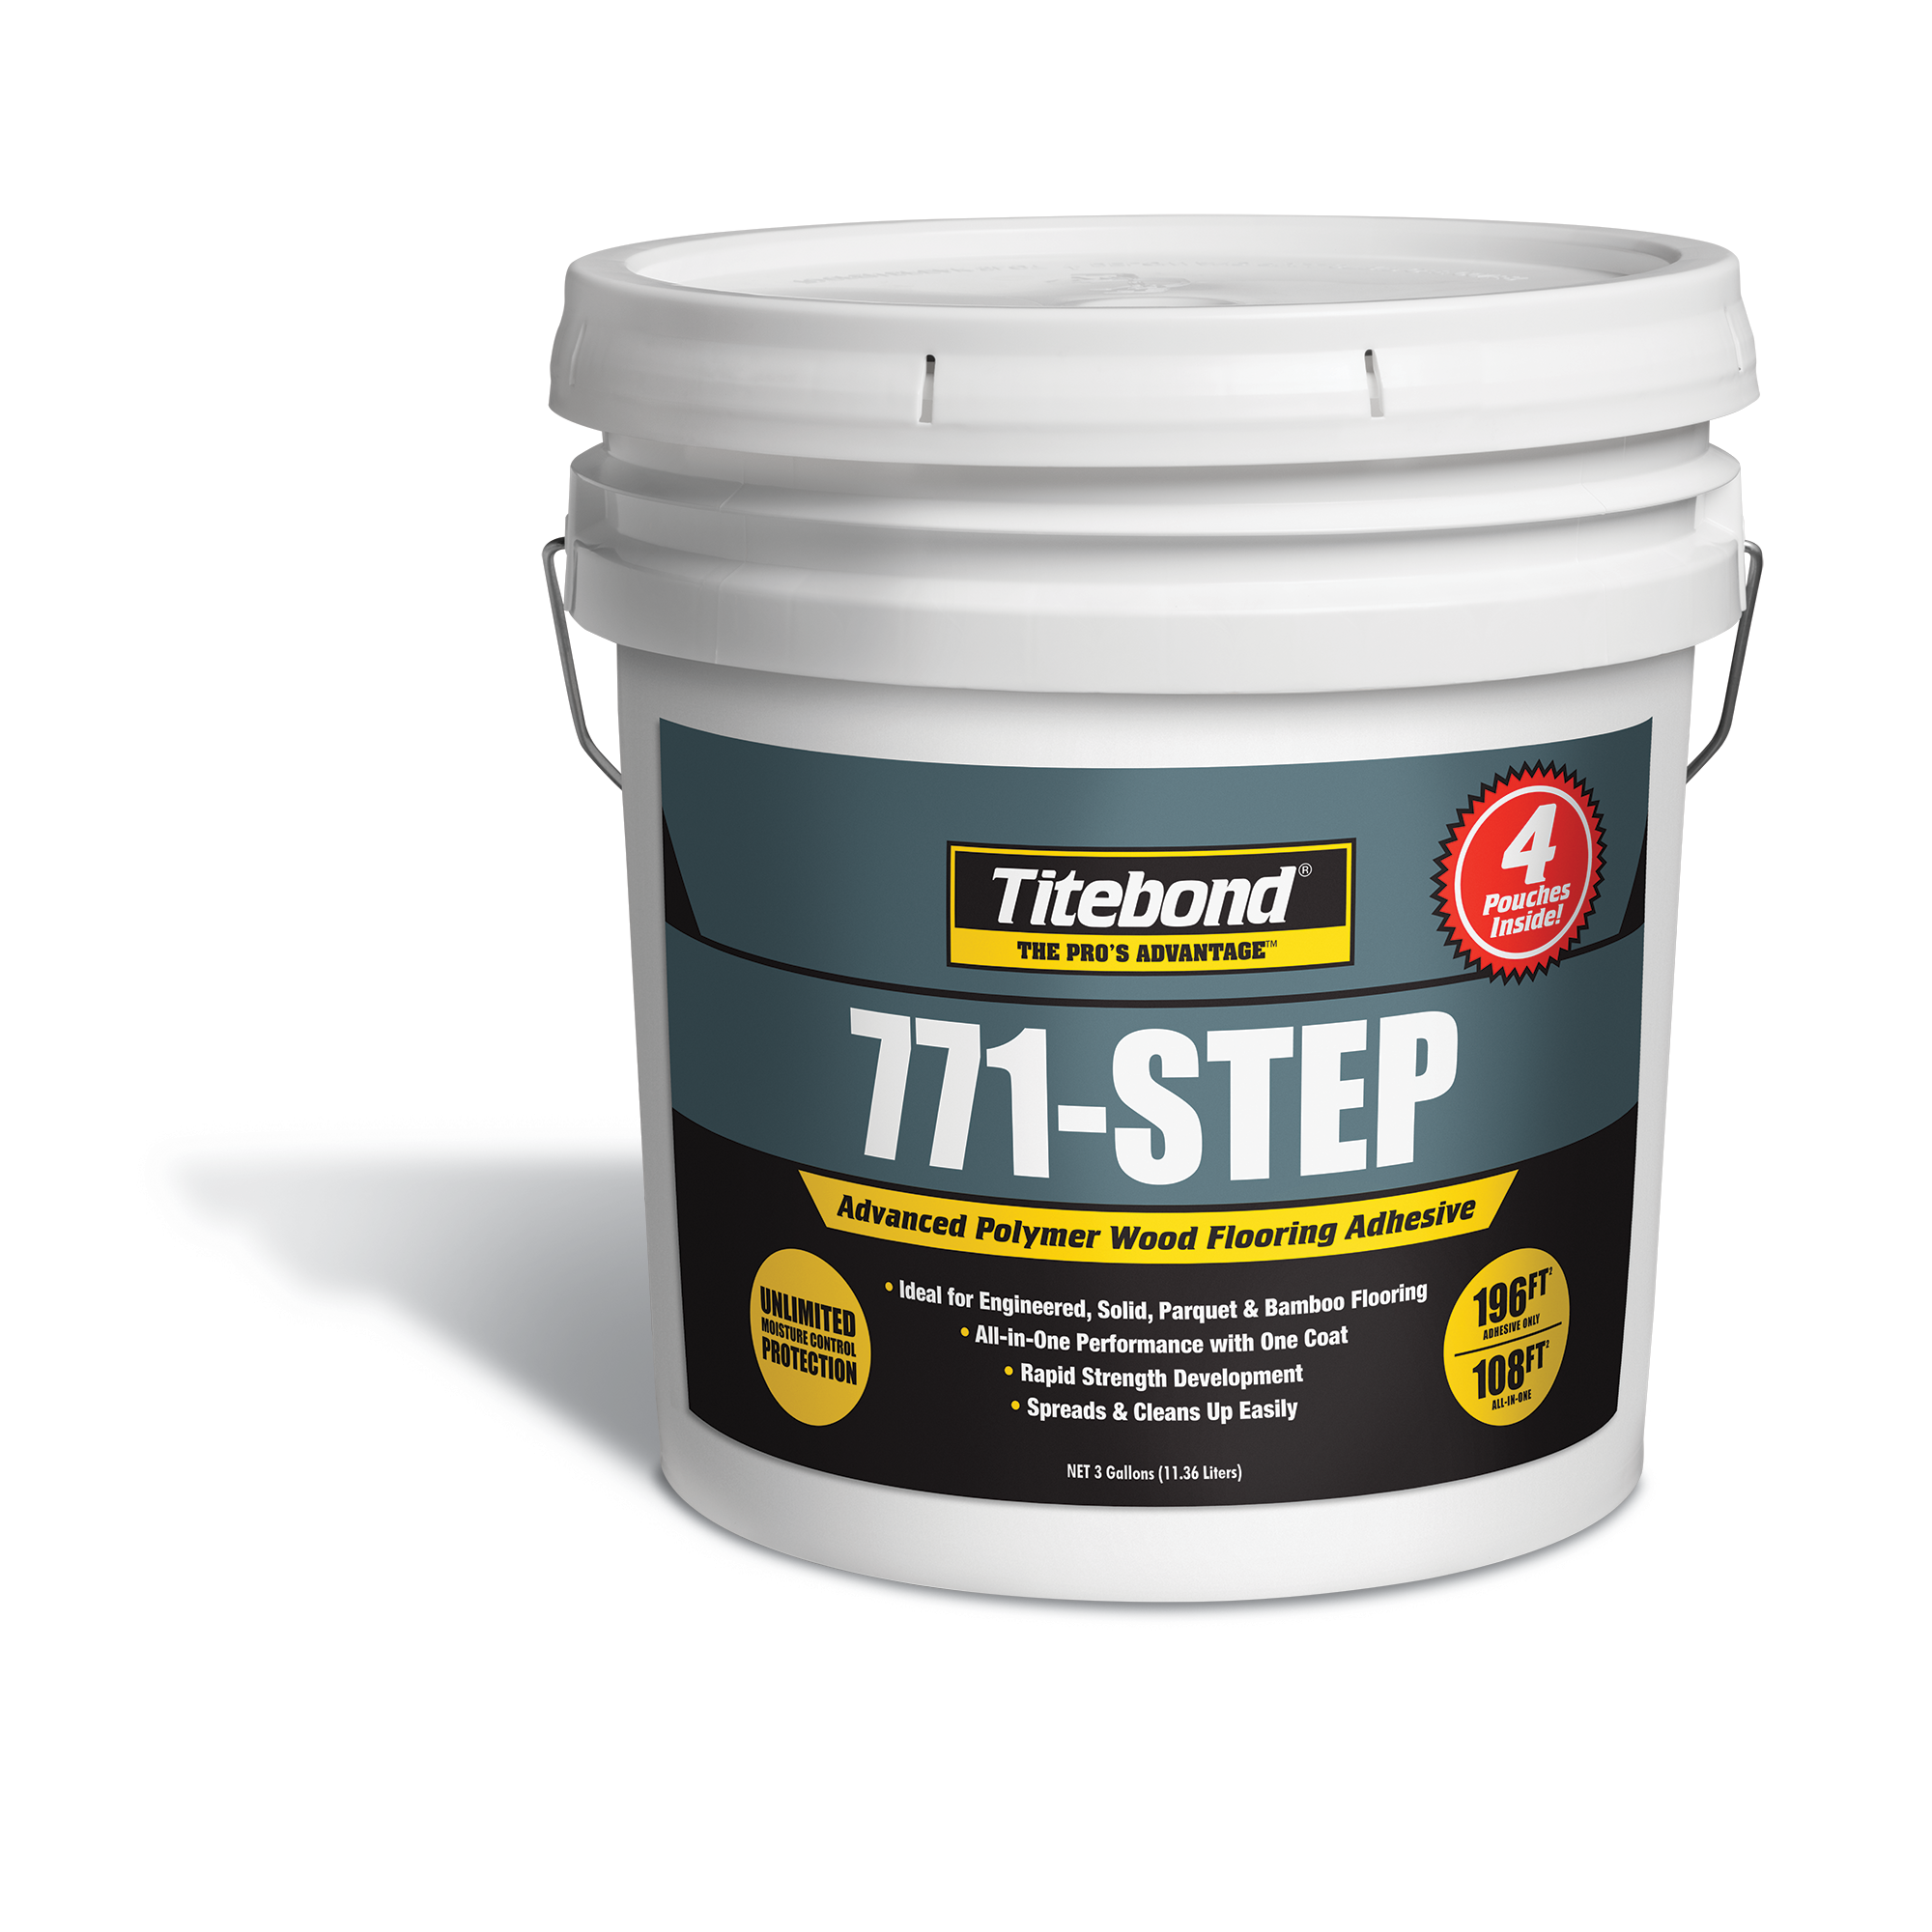 771-Step Titebond 98sq/ft Coverage Wood and Laminate Flooring Adhesive 